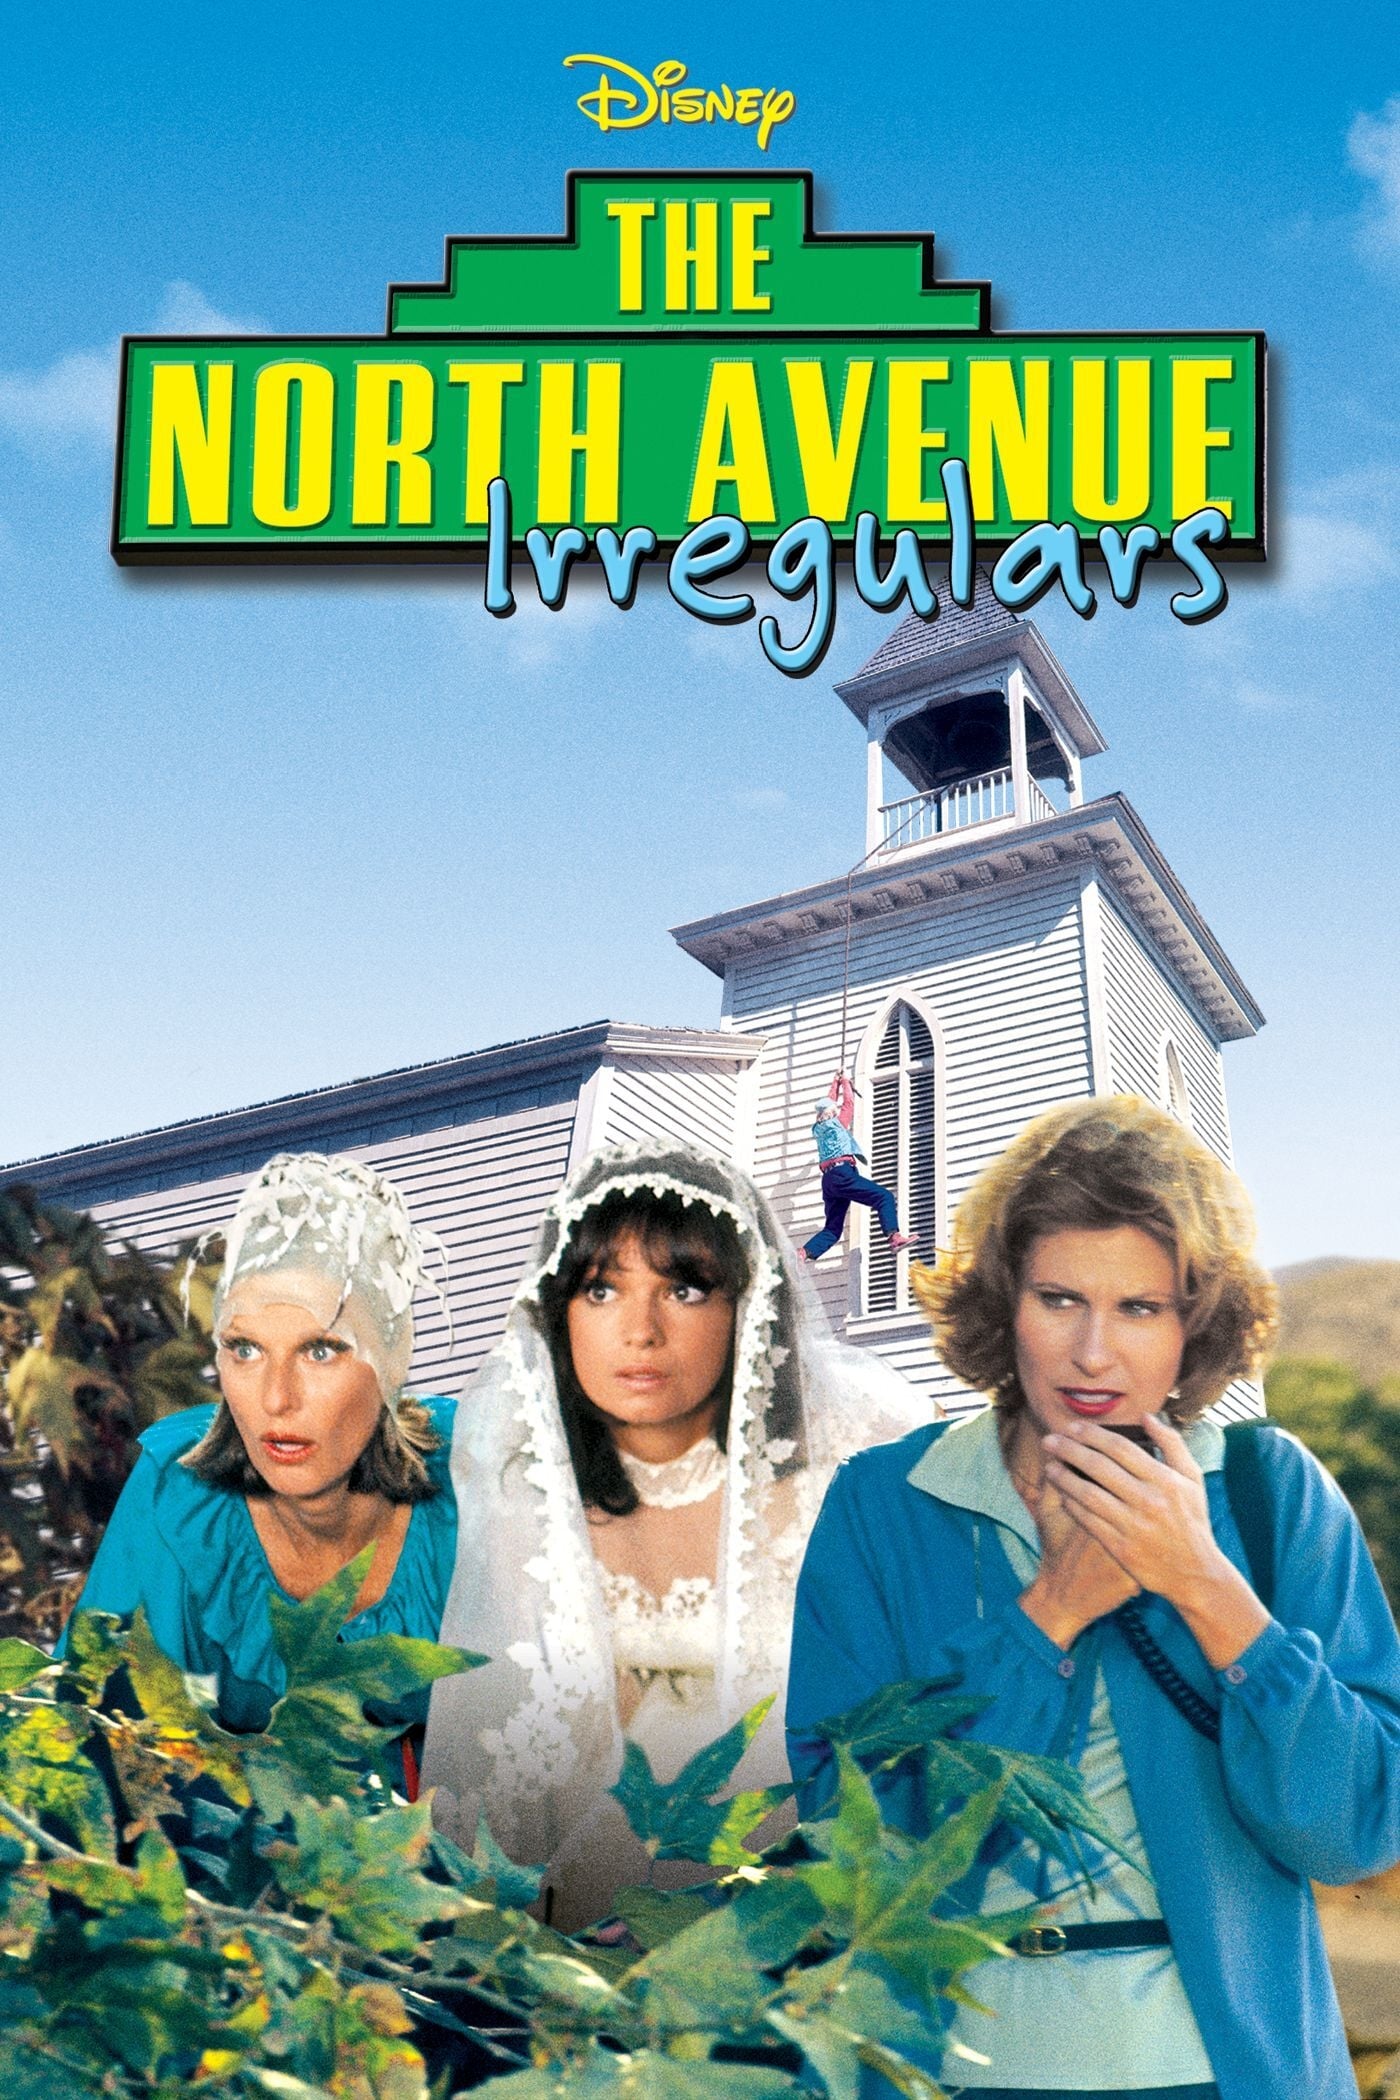 The North Avenue Irregulars (1979)